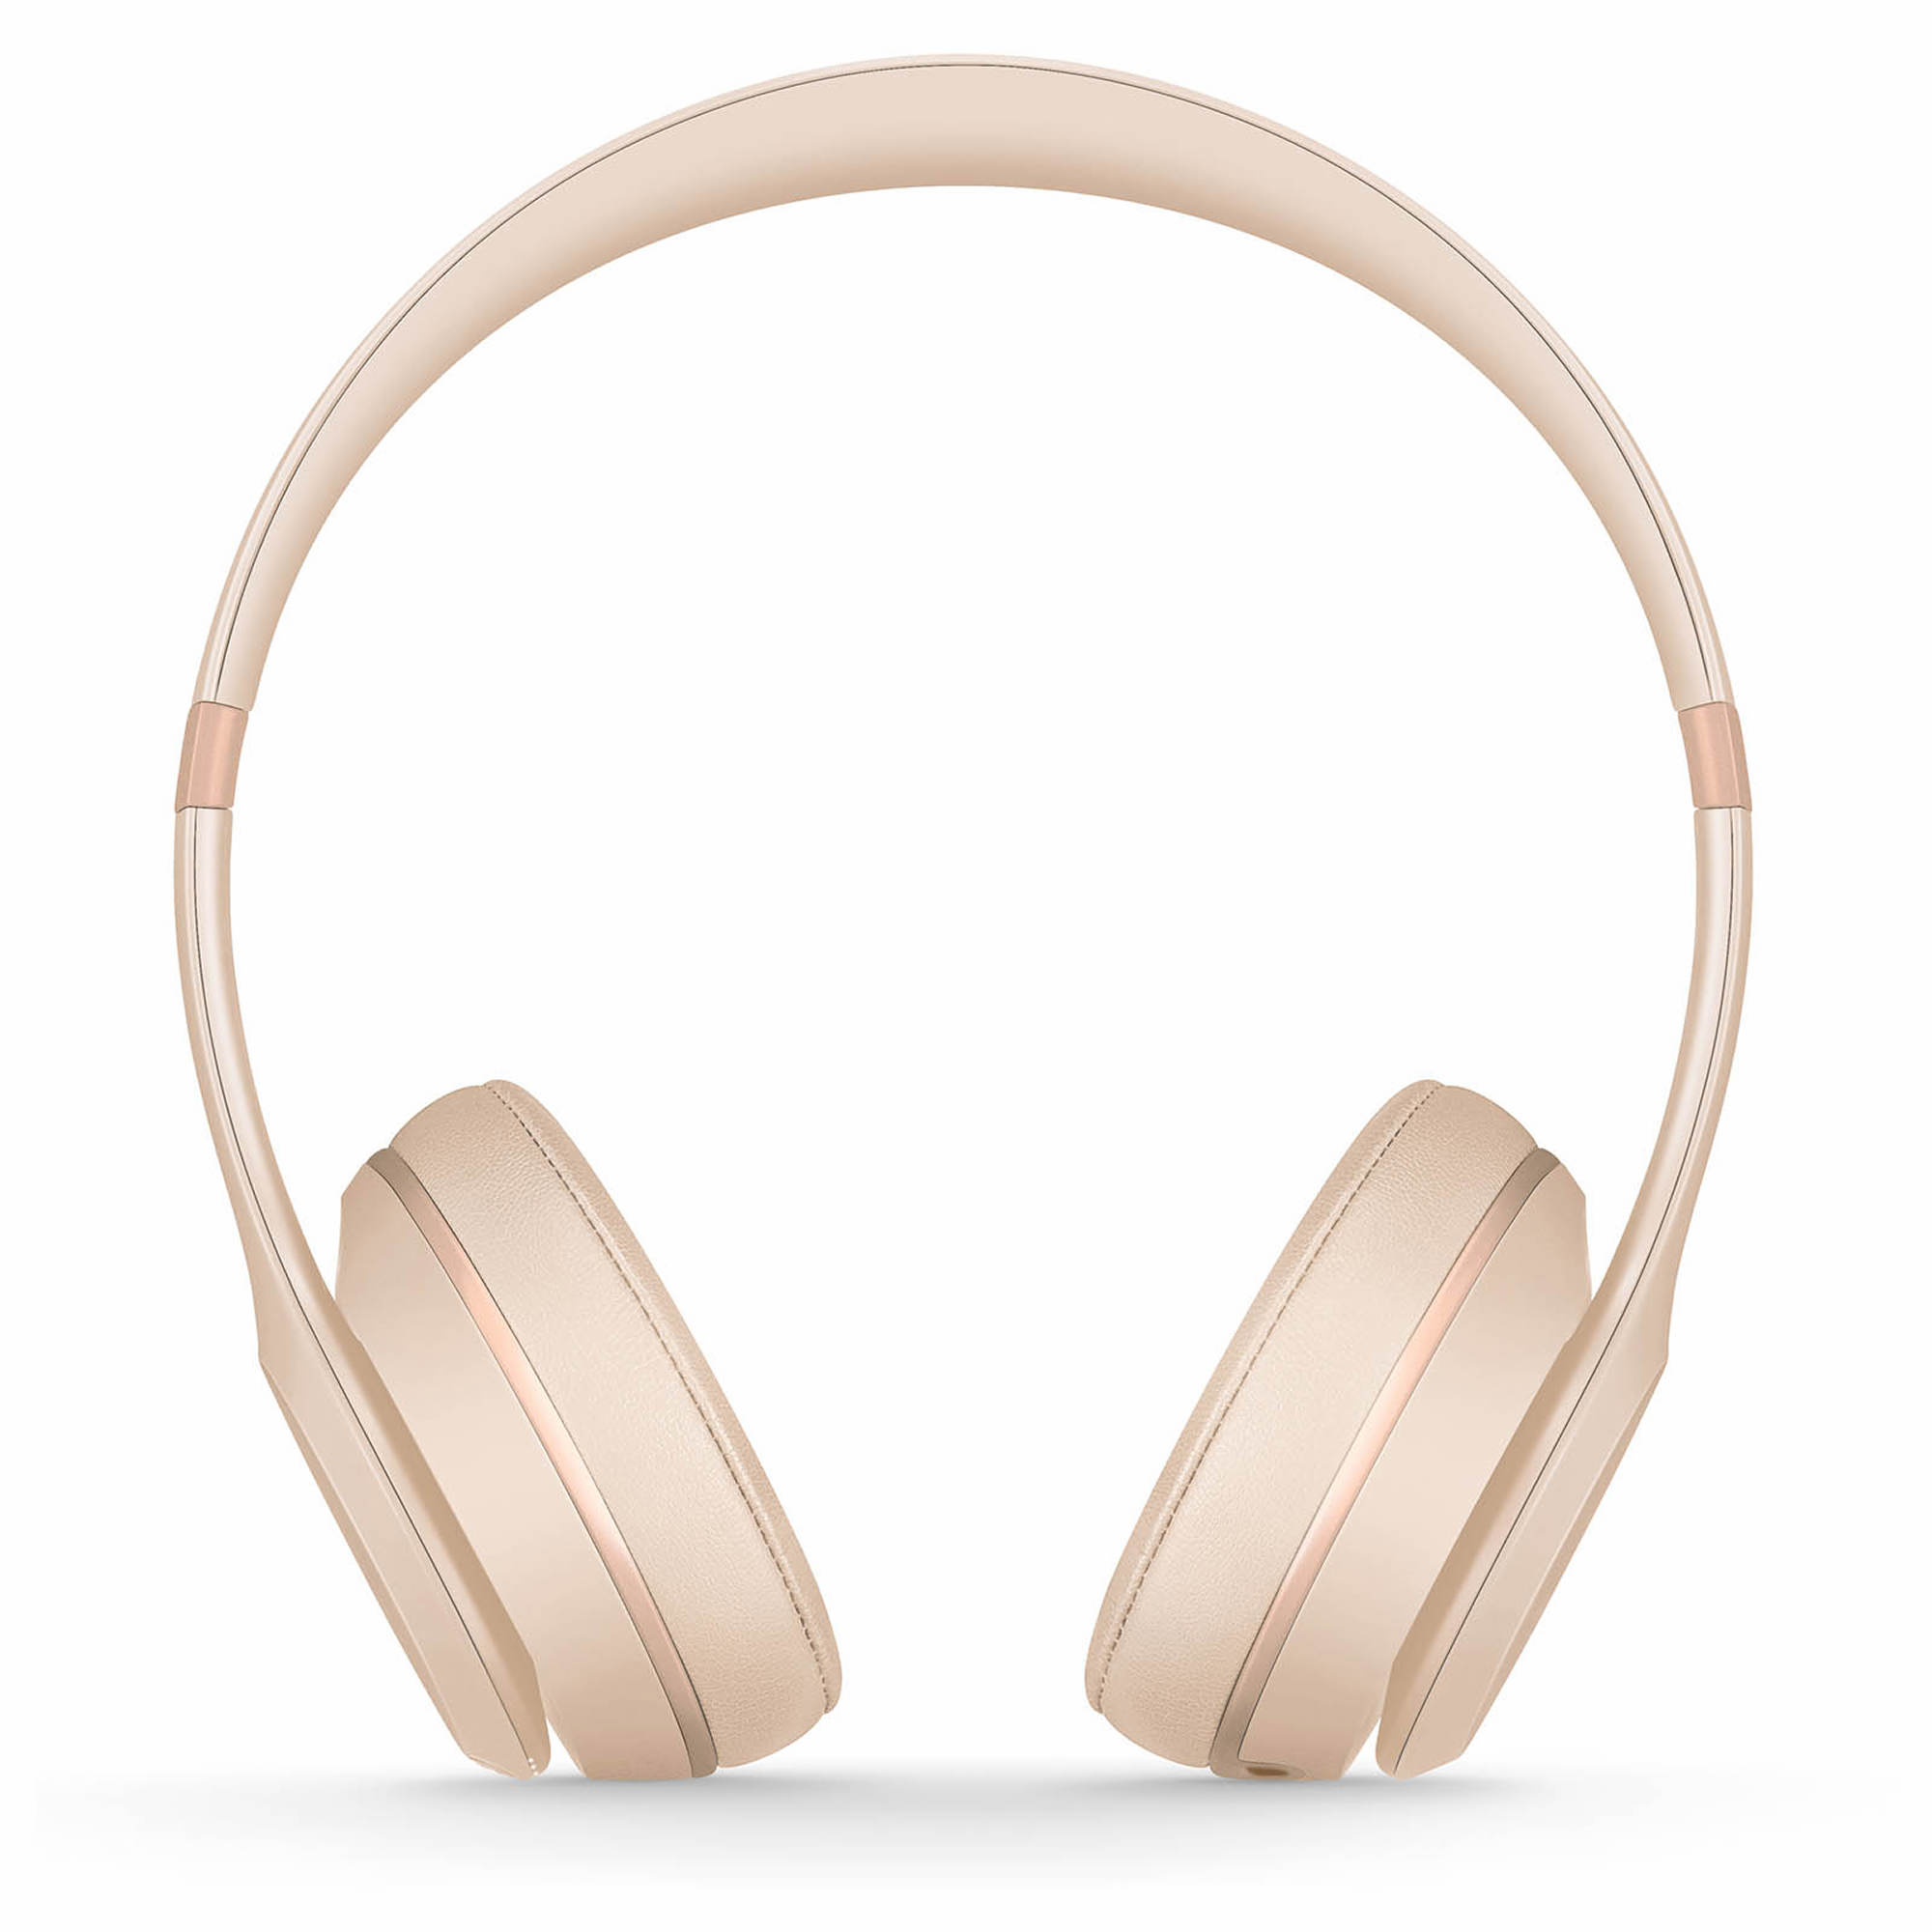 Beats Solo3 Wireless Headphones - Rose Gold - BJs WholeSale Club